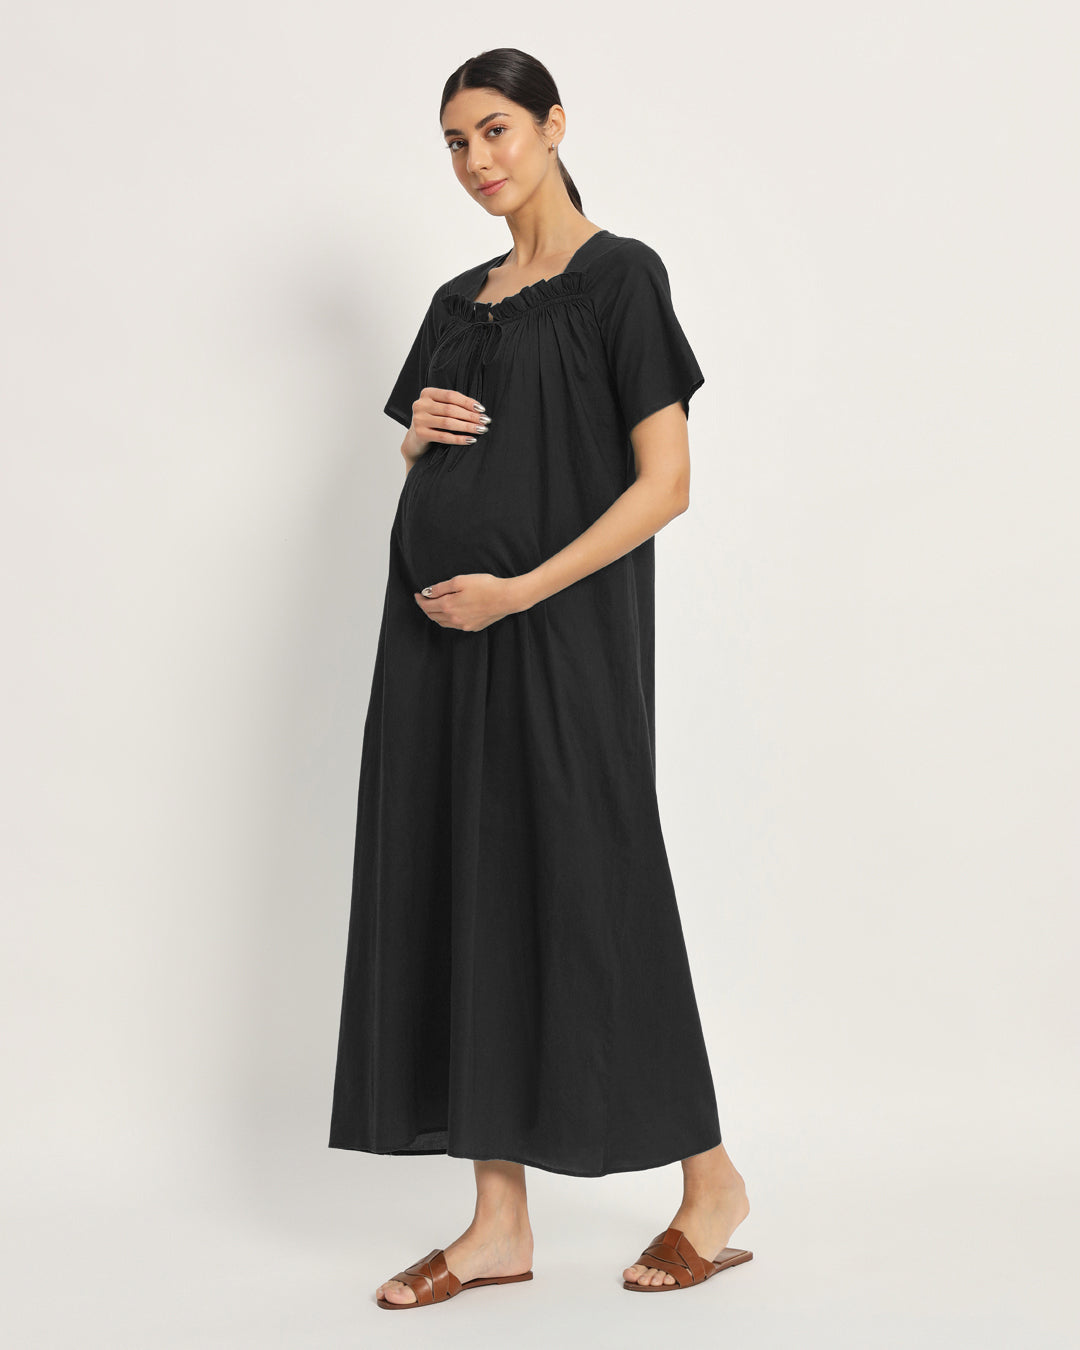 Combo: Black & Iris Pink Nurture N' Shine Maternity & Nursing Dress